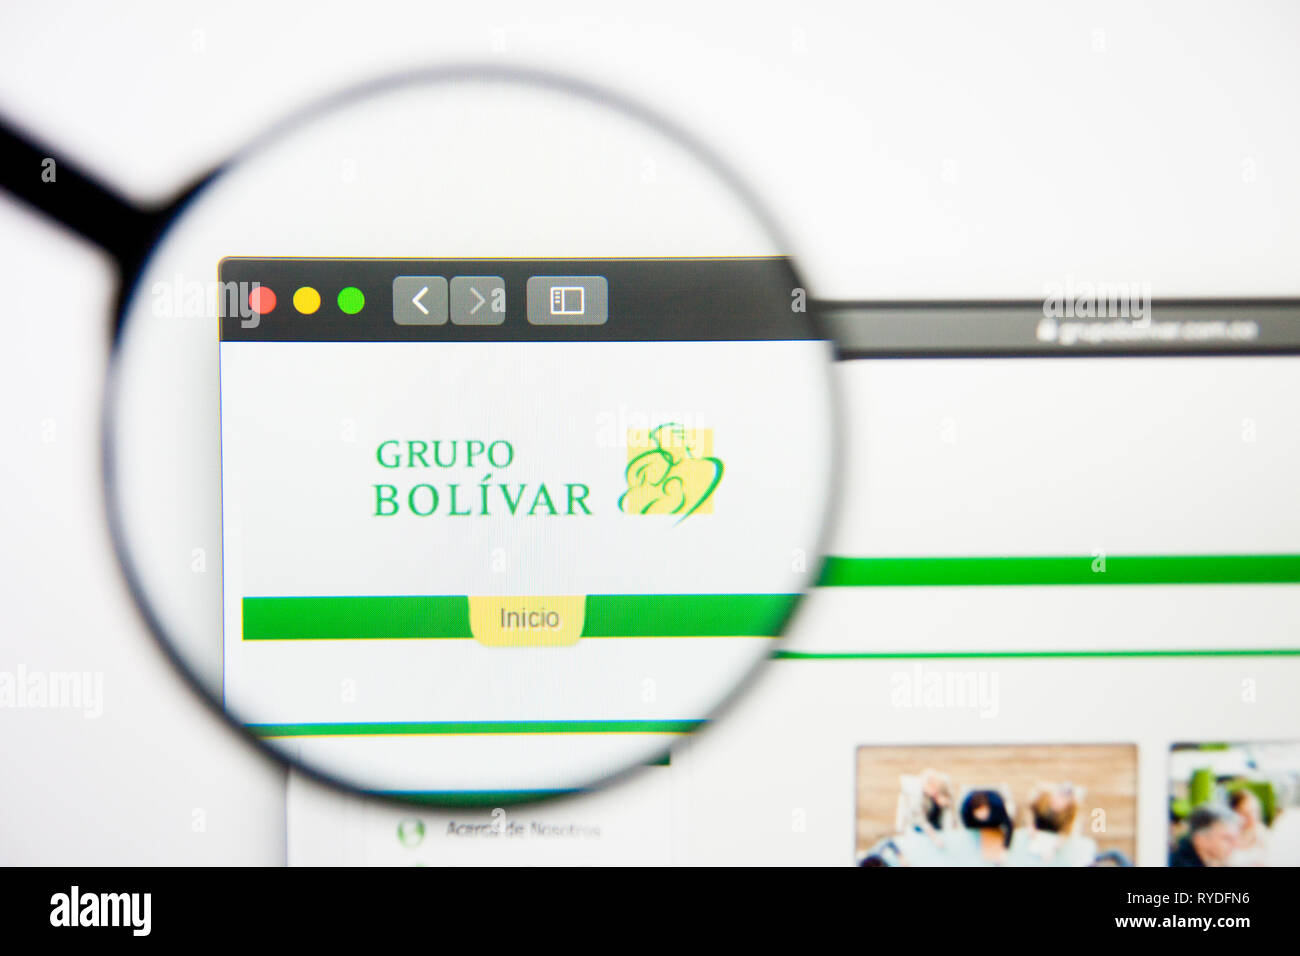 Los Angeles, Kalifornien, USA - 28. Februar 2019: Grupo Bolivar Homepage. Grupo Bolivar Logo sichtbar auf dem Display, Illustrative Editorial Stockfoto